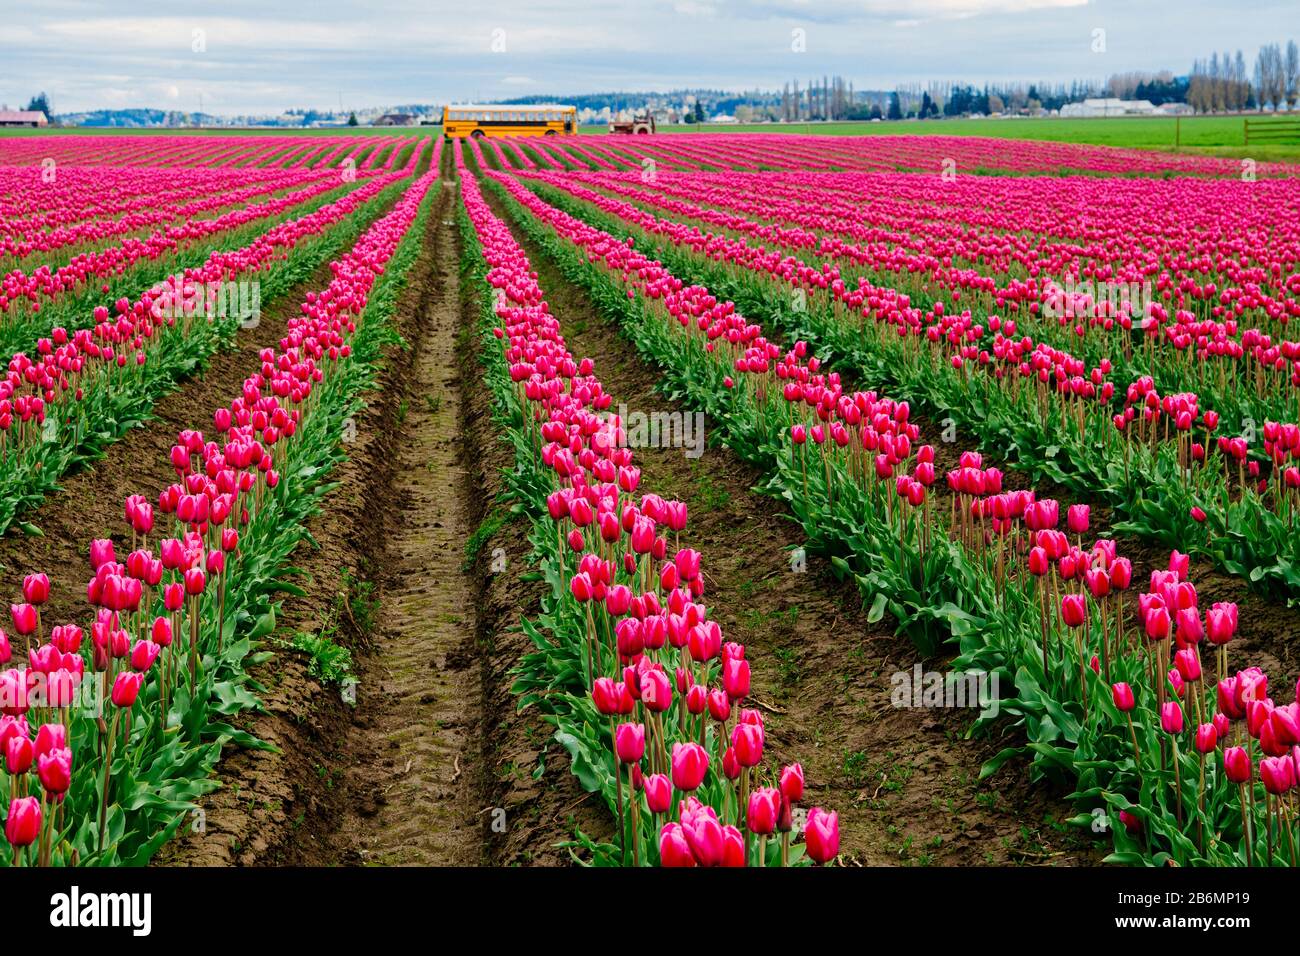 View of tulip field, Skagit Valley, Washington, USA Stock Photo